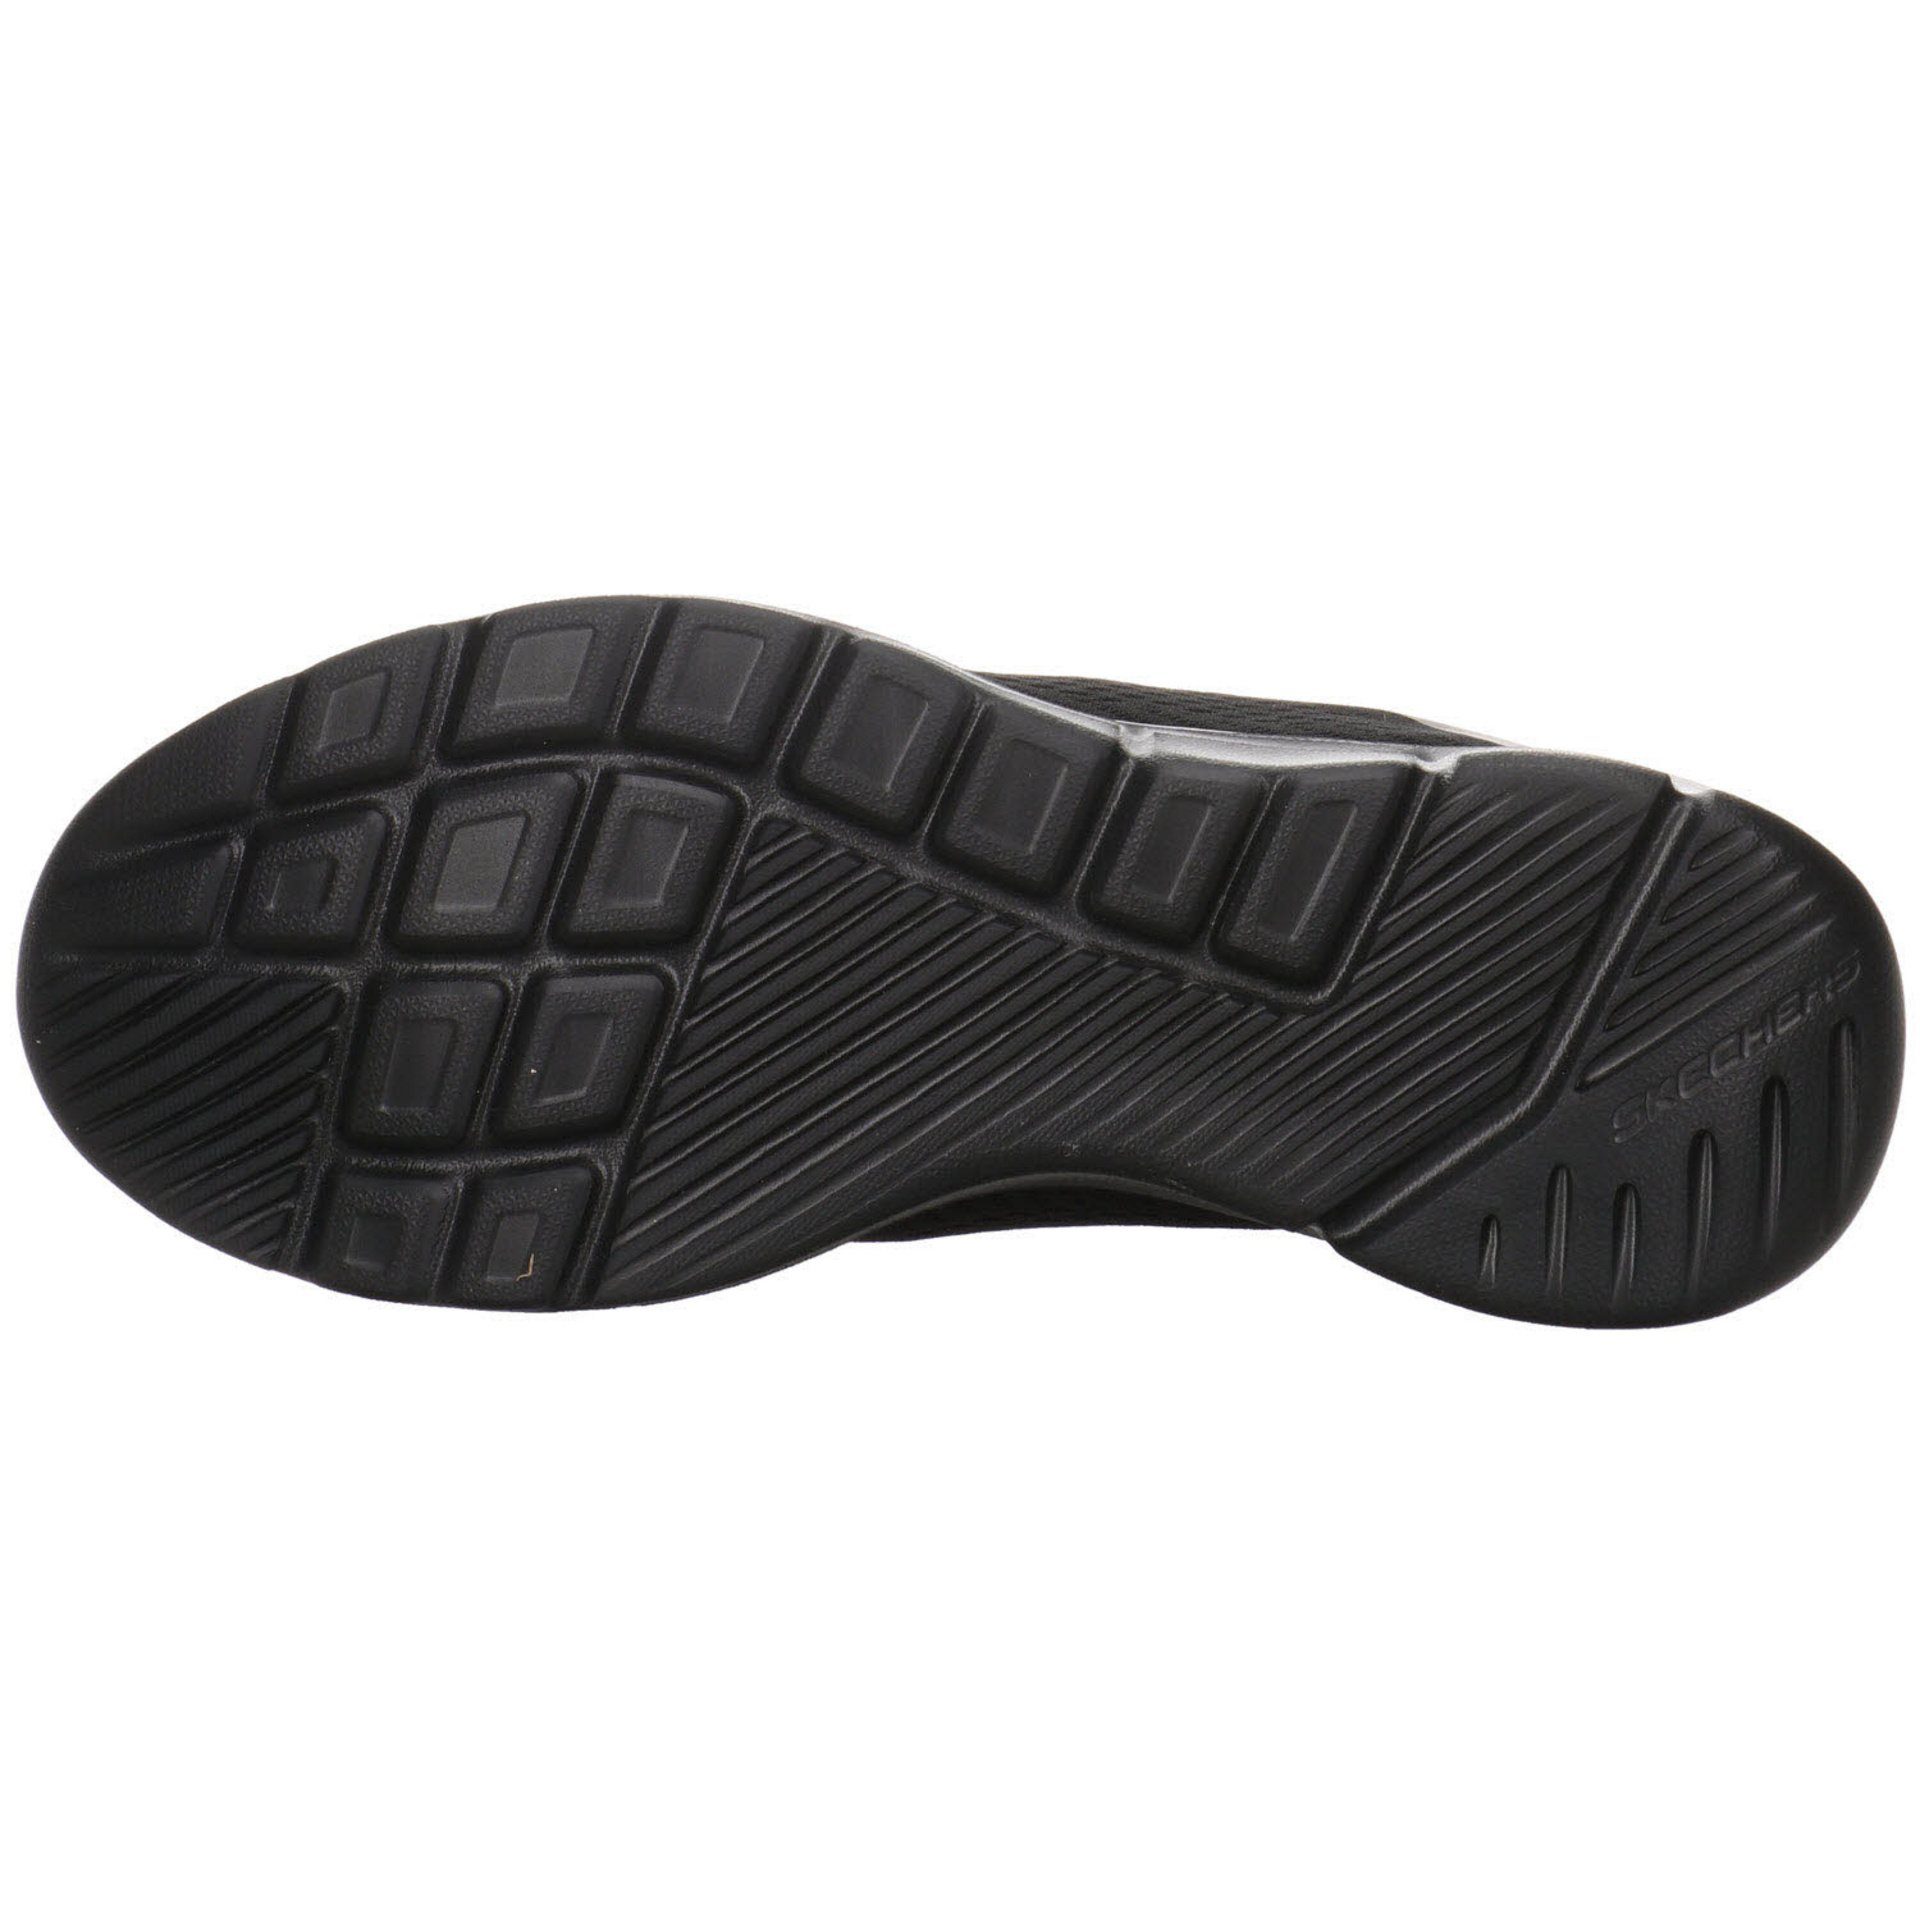 Skechers Relaxed Fit-Equalizer 3.0 Sneaker schwarz uni Textil Textil Sneaker